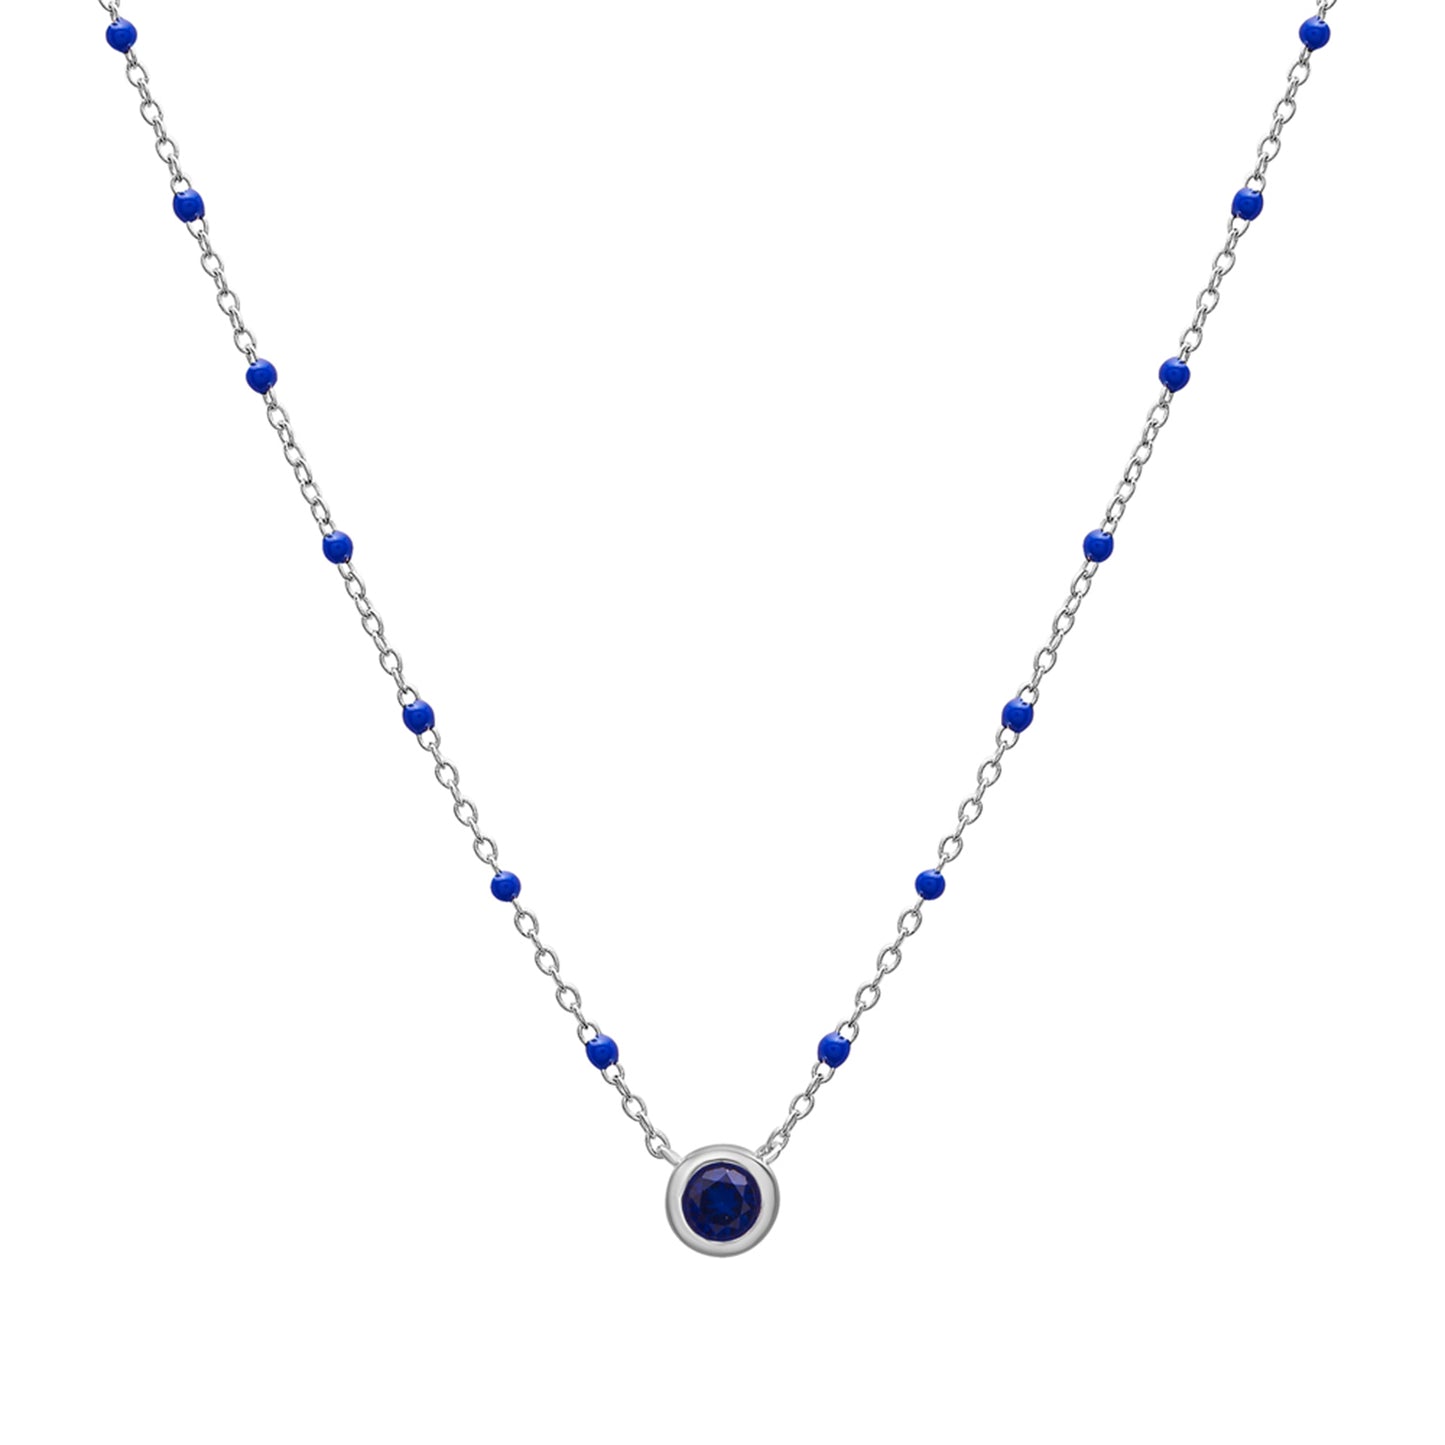 Birthstone Enamel Necklaces in Blue stone